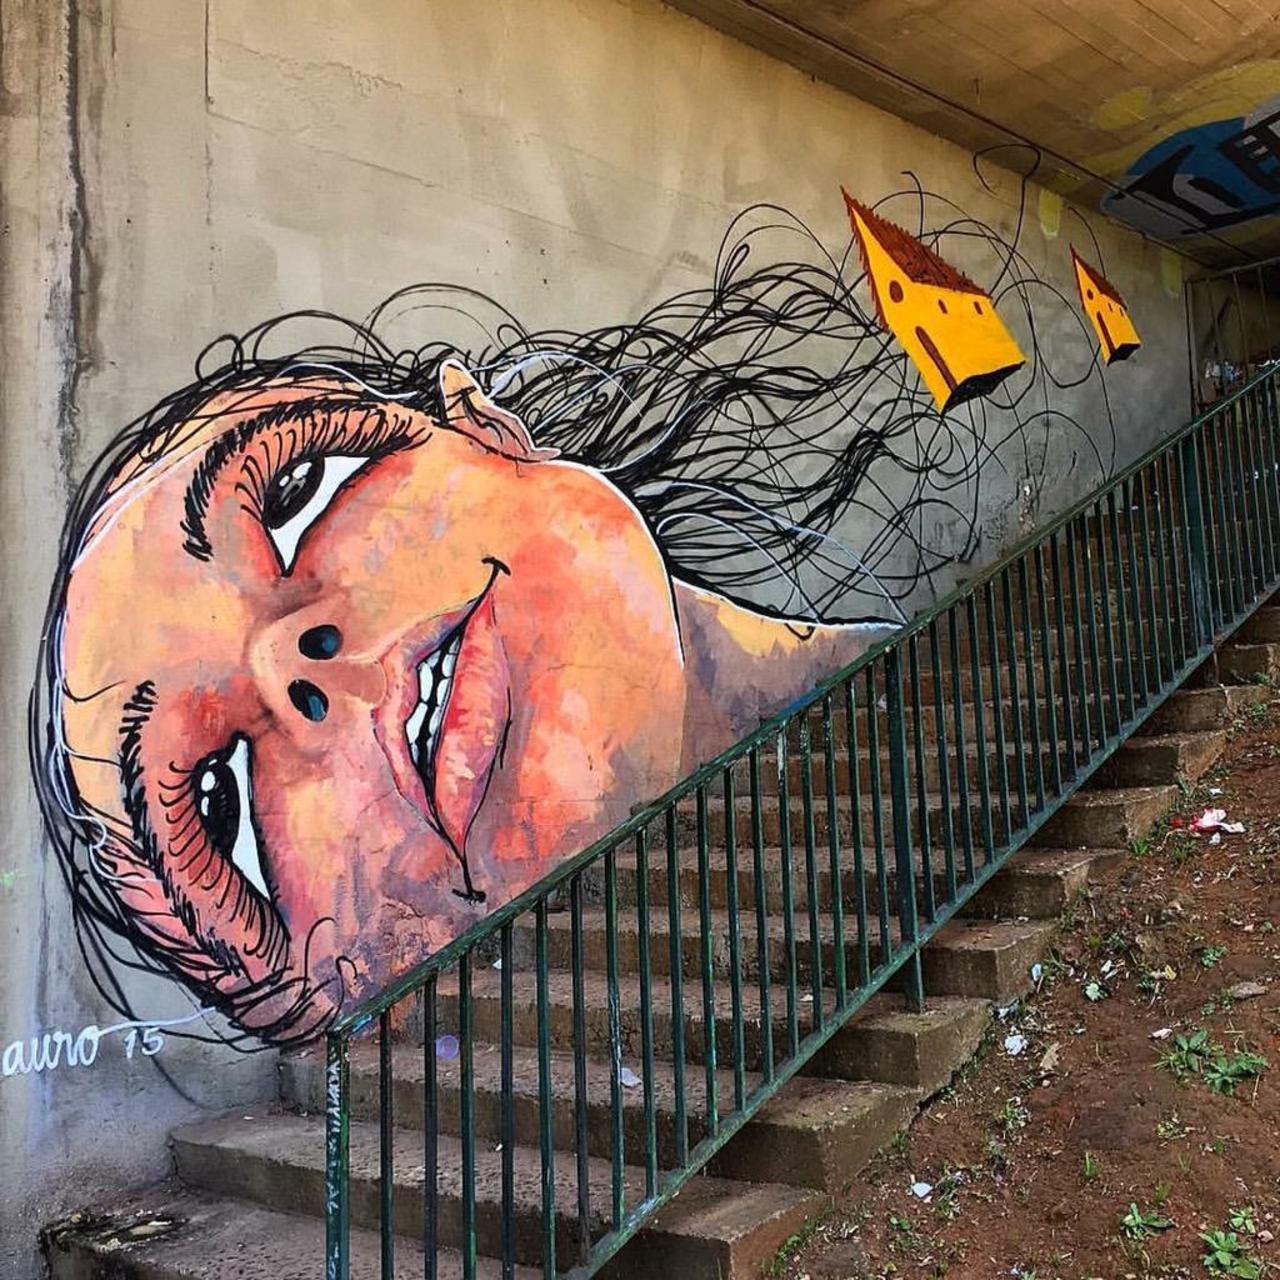 Street Art by Reveracidade in São Paulo 

#art #graffiti #mural #streetart http://t.co/yacIyUuijw